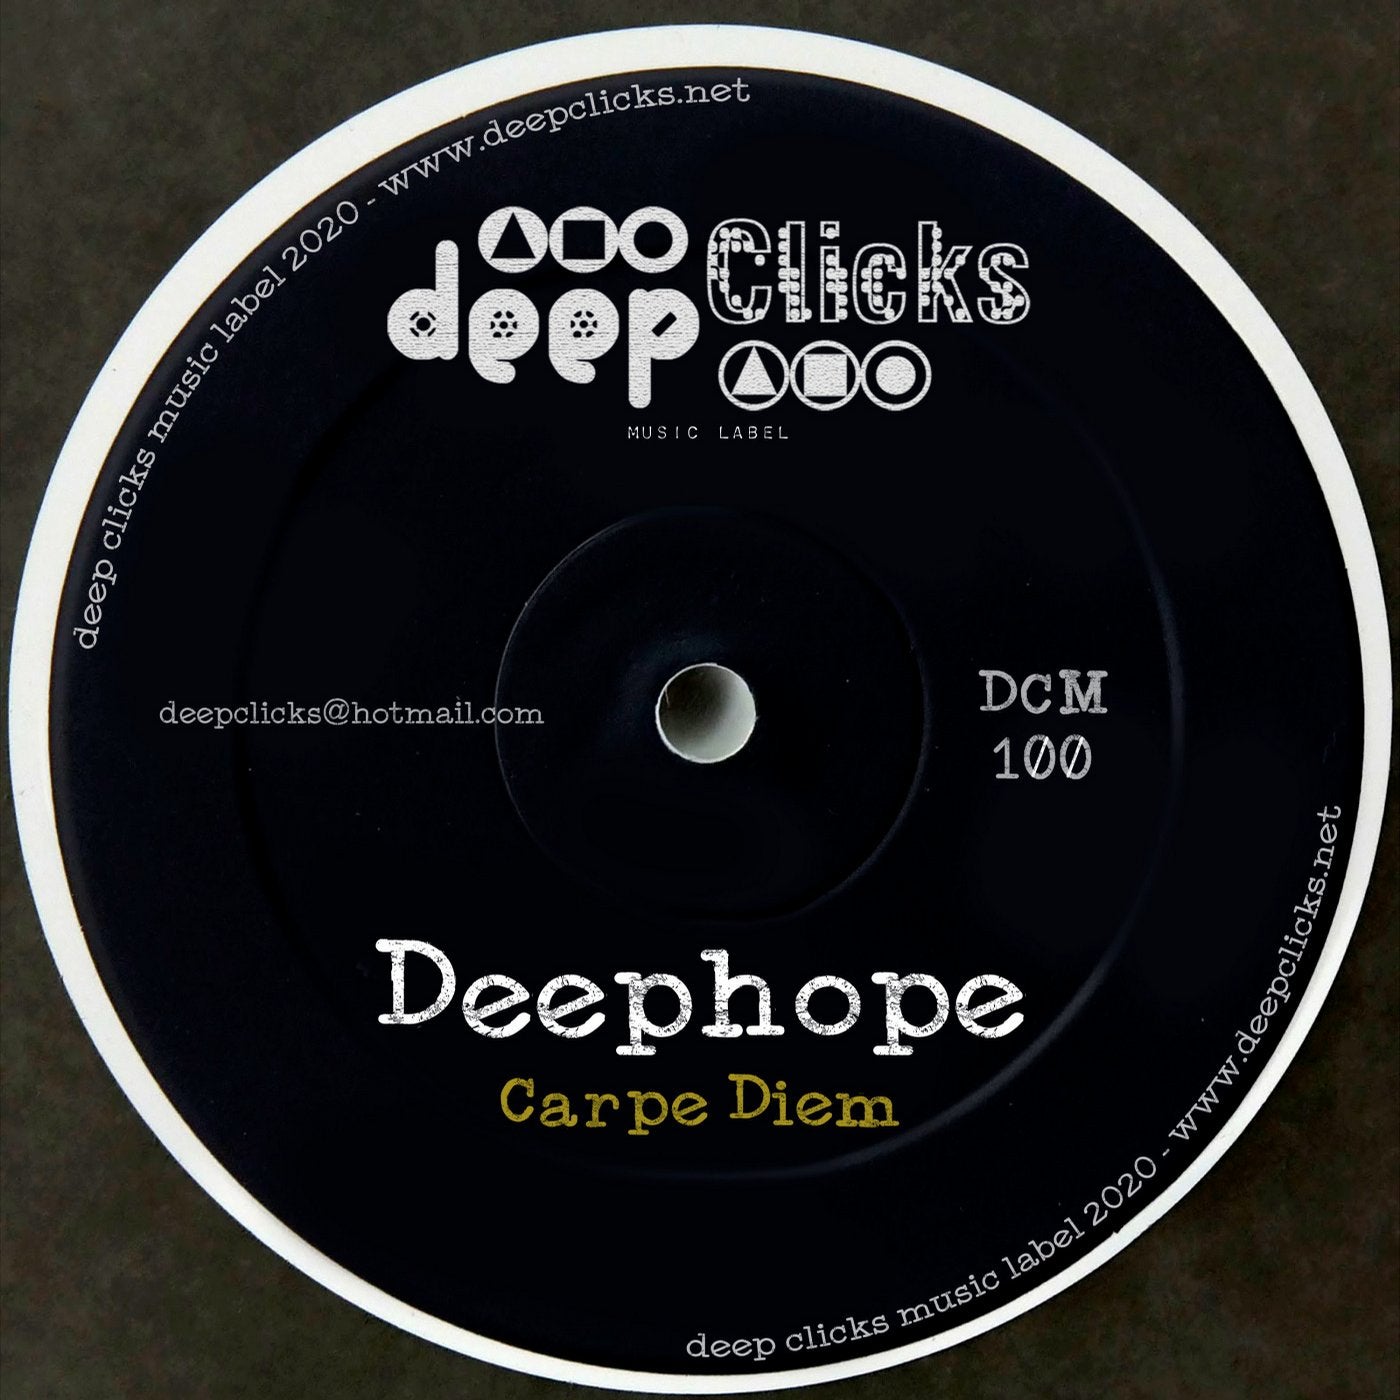 Deephope. Deep click